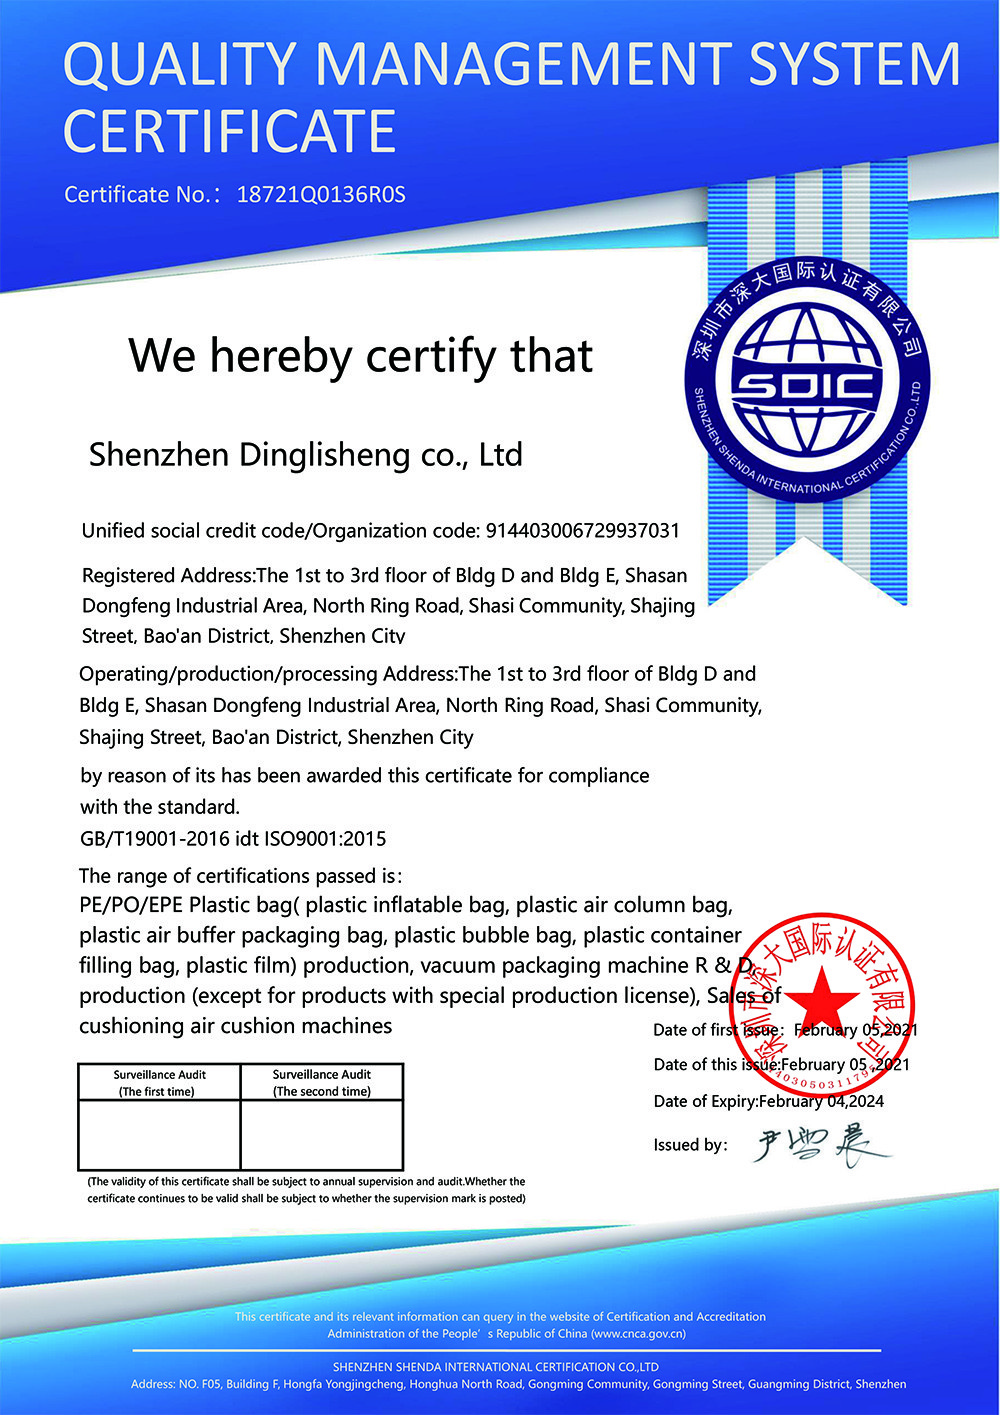 Shenzhen Dinglisheng Technology Co., Ltd. Certifications